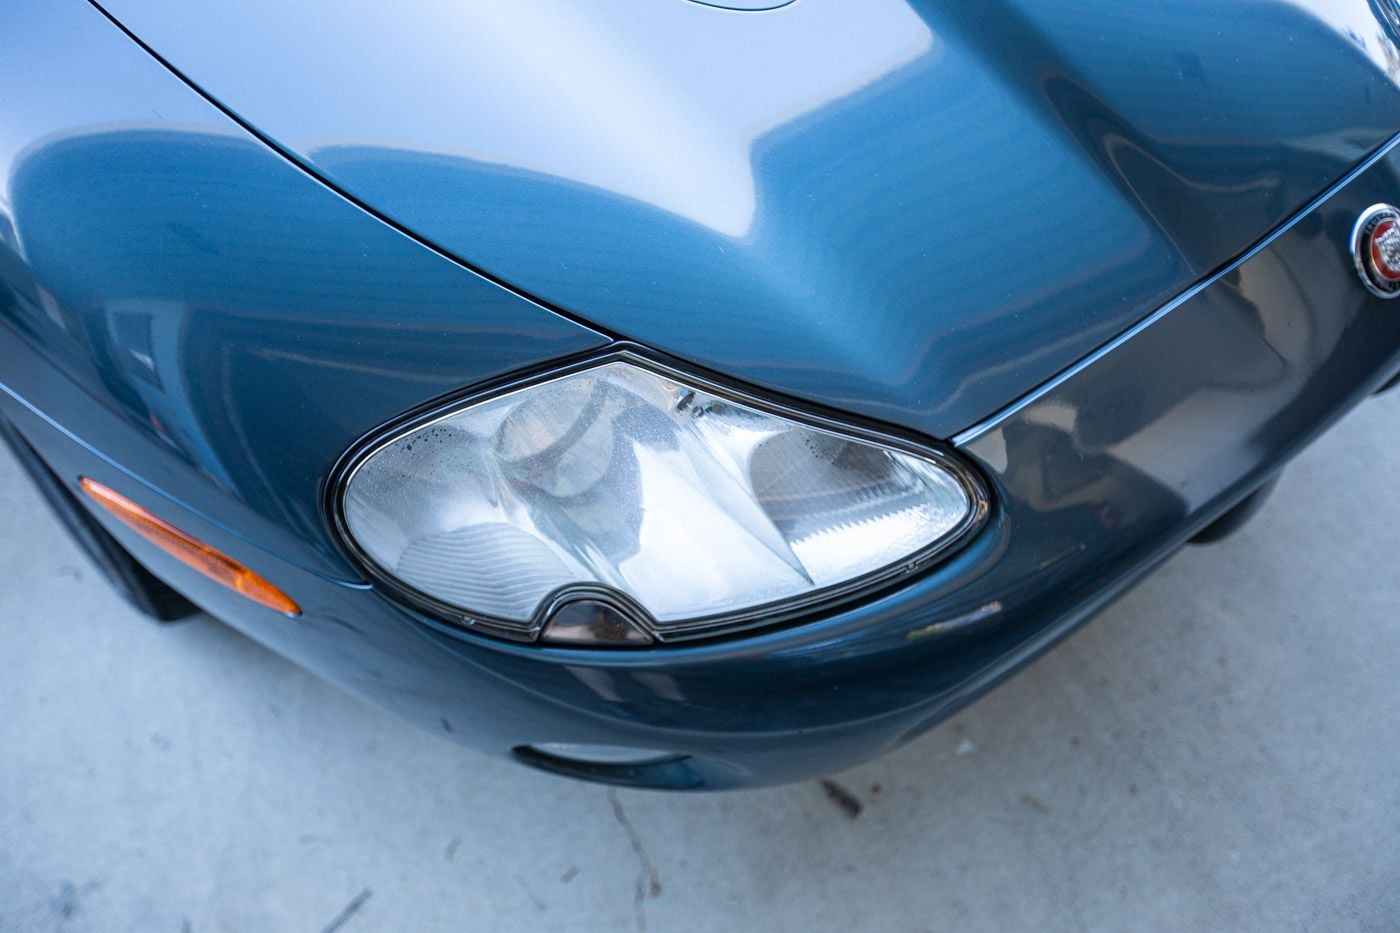 2001 Jaguar XKR - 2001 Jaguar XKR - Used - VIN SAJDA42B91PA14965 - 128,414 Miles - 8 cyl - 2WD - Automatic - Convertible - Blue - San Luis Obispo, CA 93405, United States